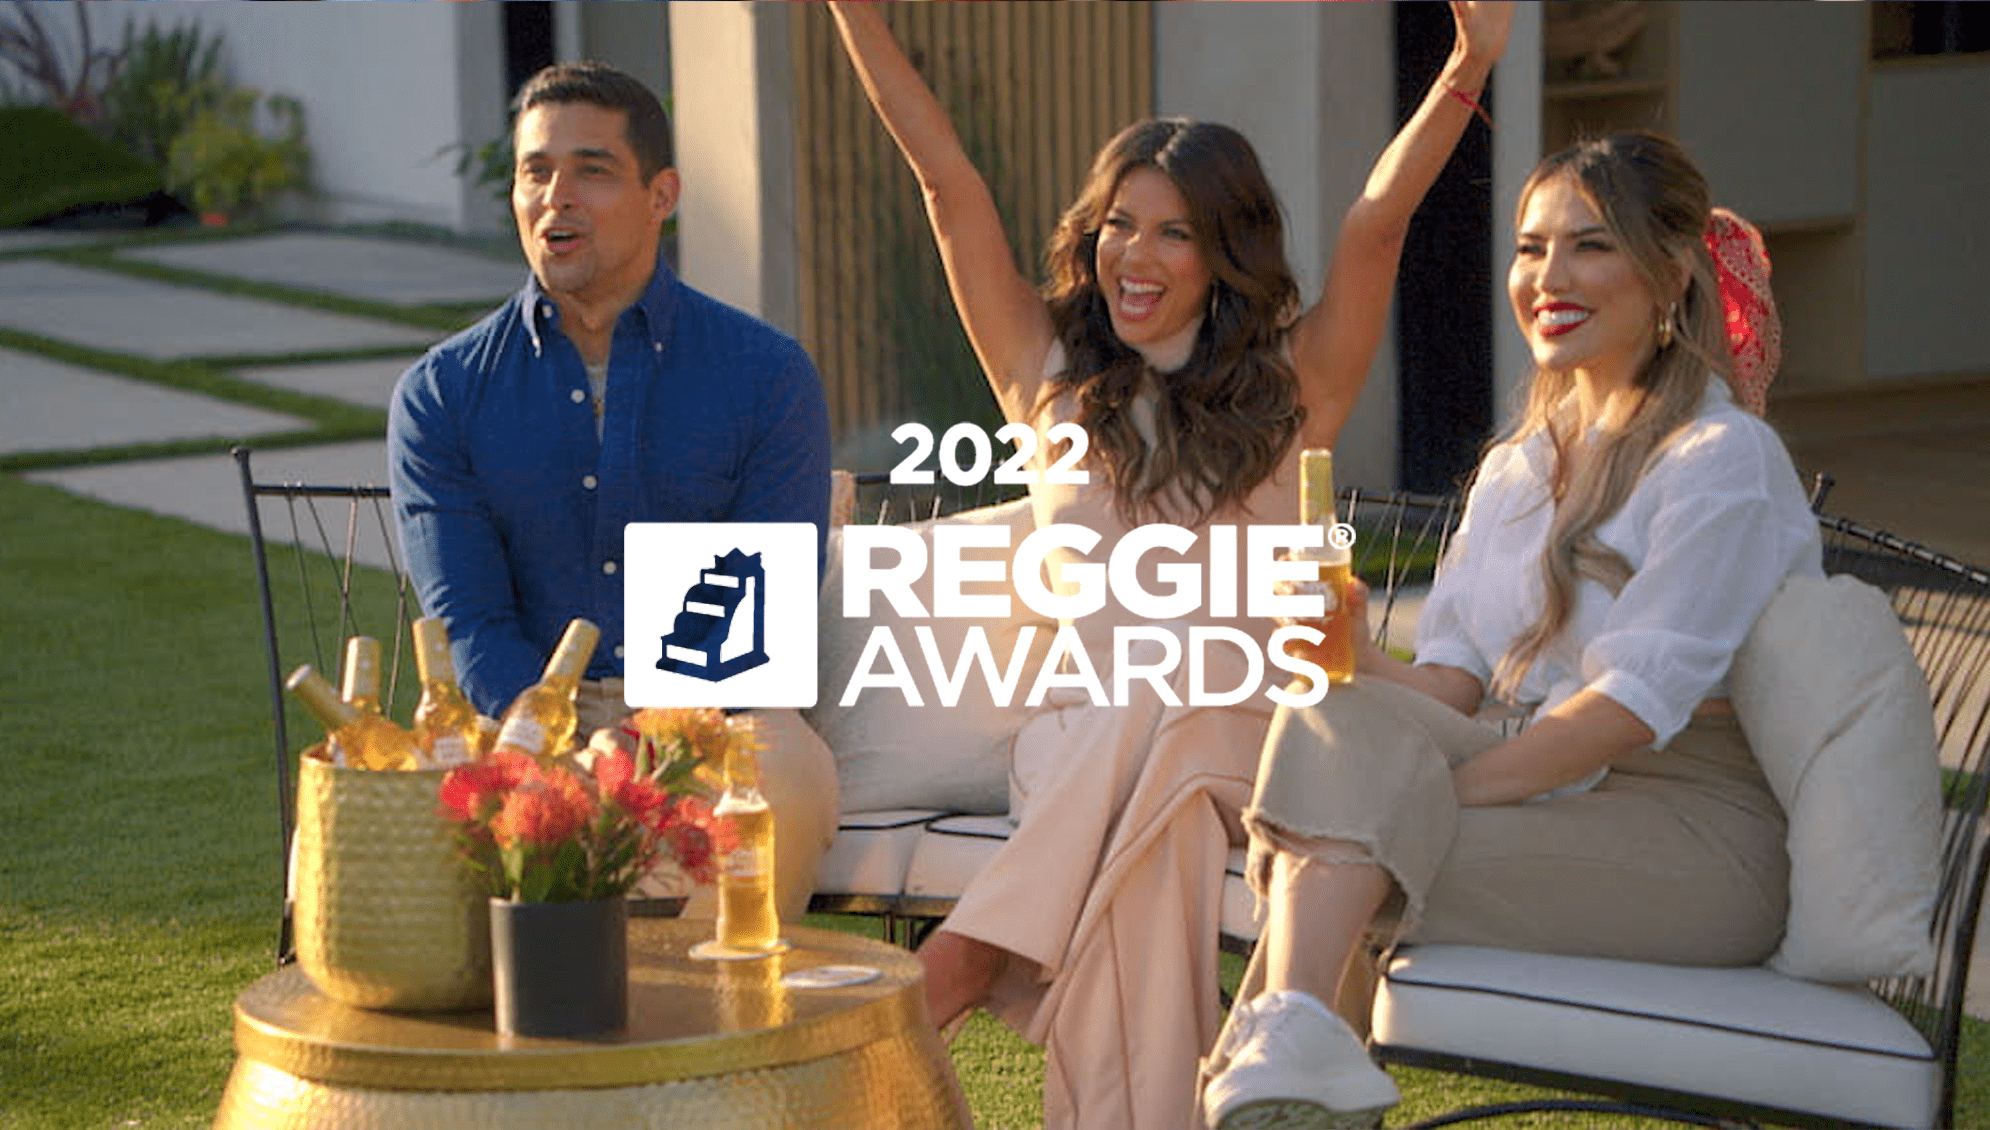 Anheuser-Busch’s “Reventón de Verano” Selected as a Bronze Winner at the 2022 ANA Reggie Awards